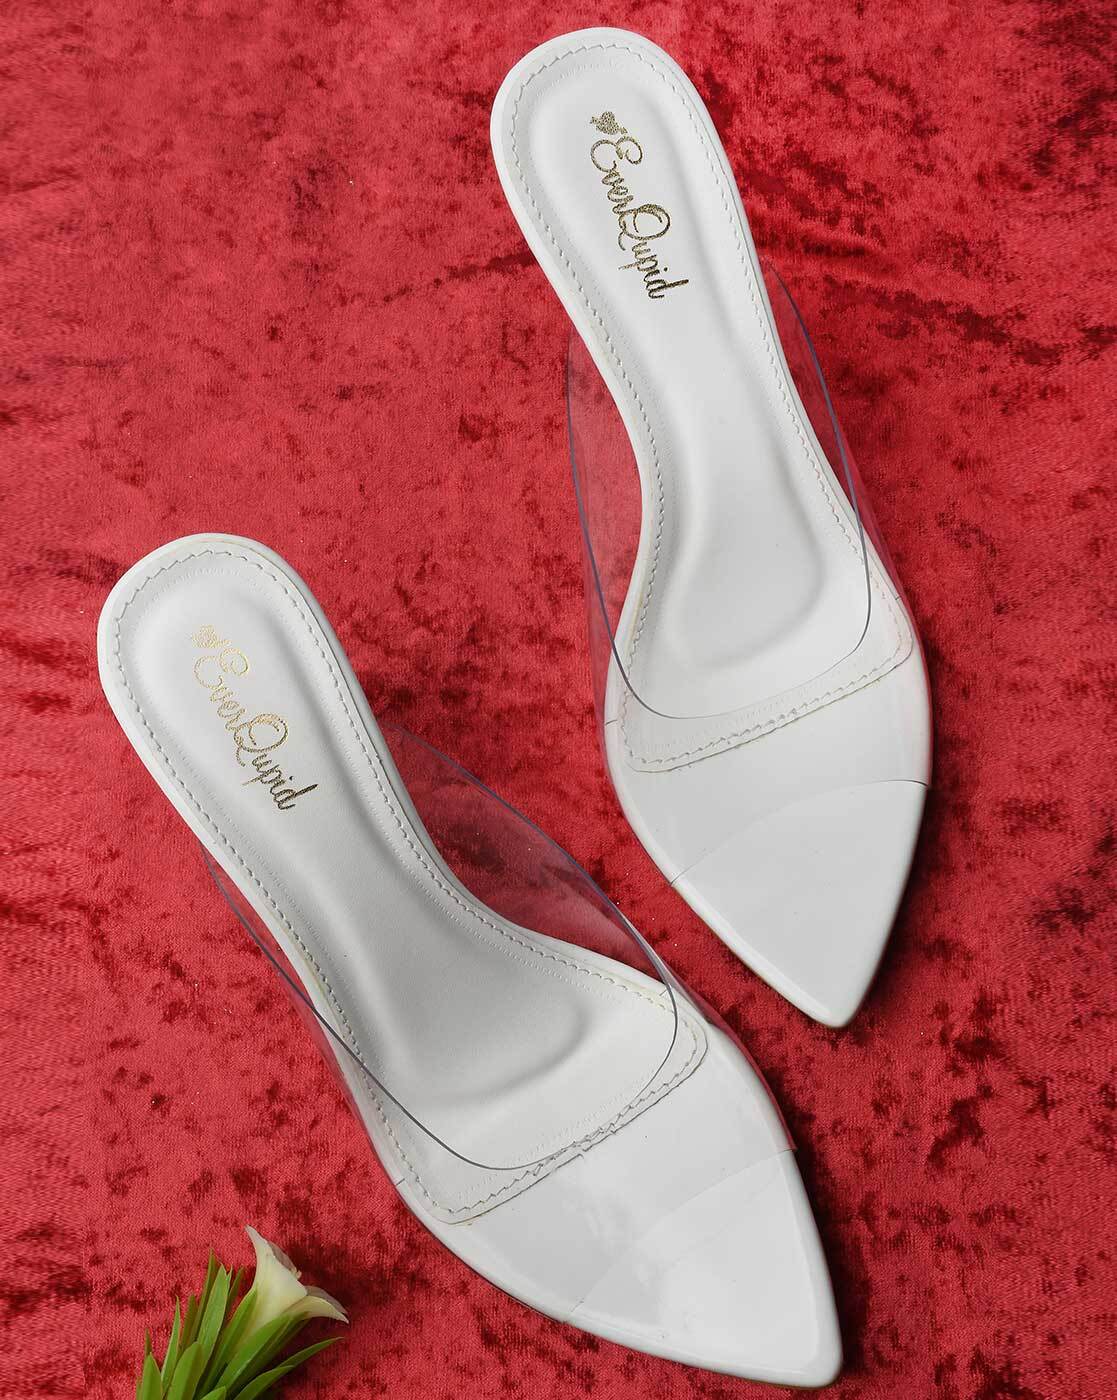 Off-White Margaux Heels by Sophia Webster on Sale